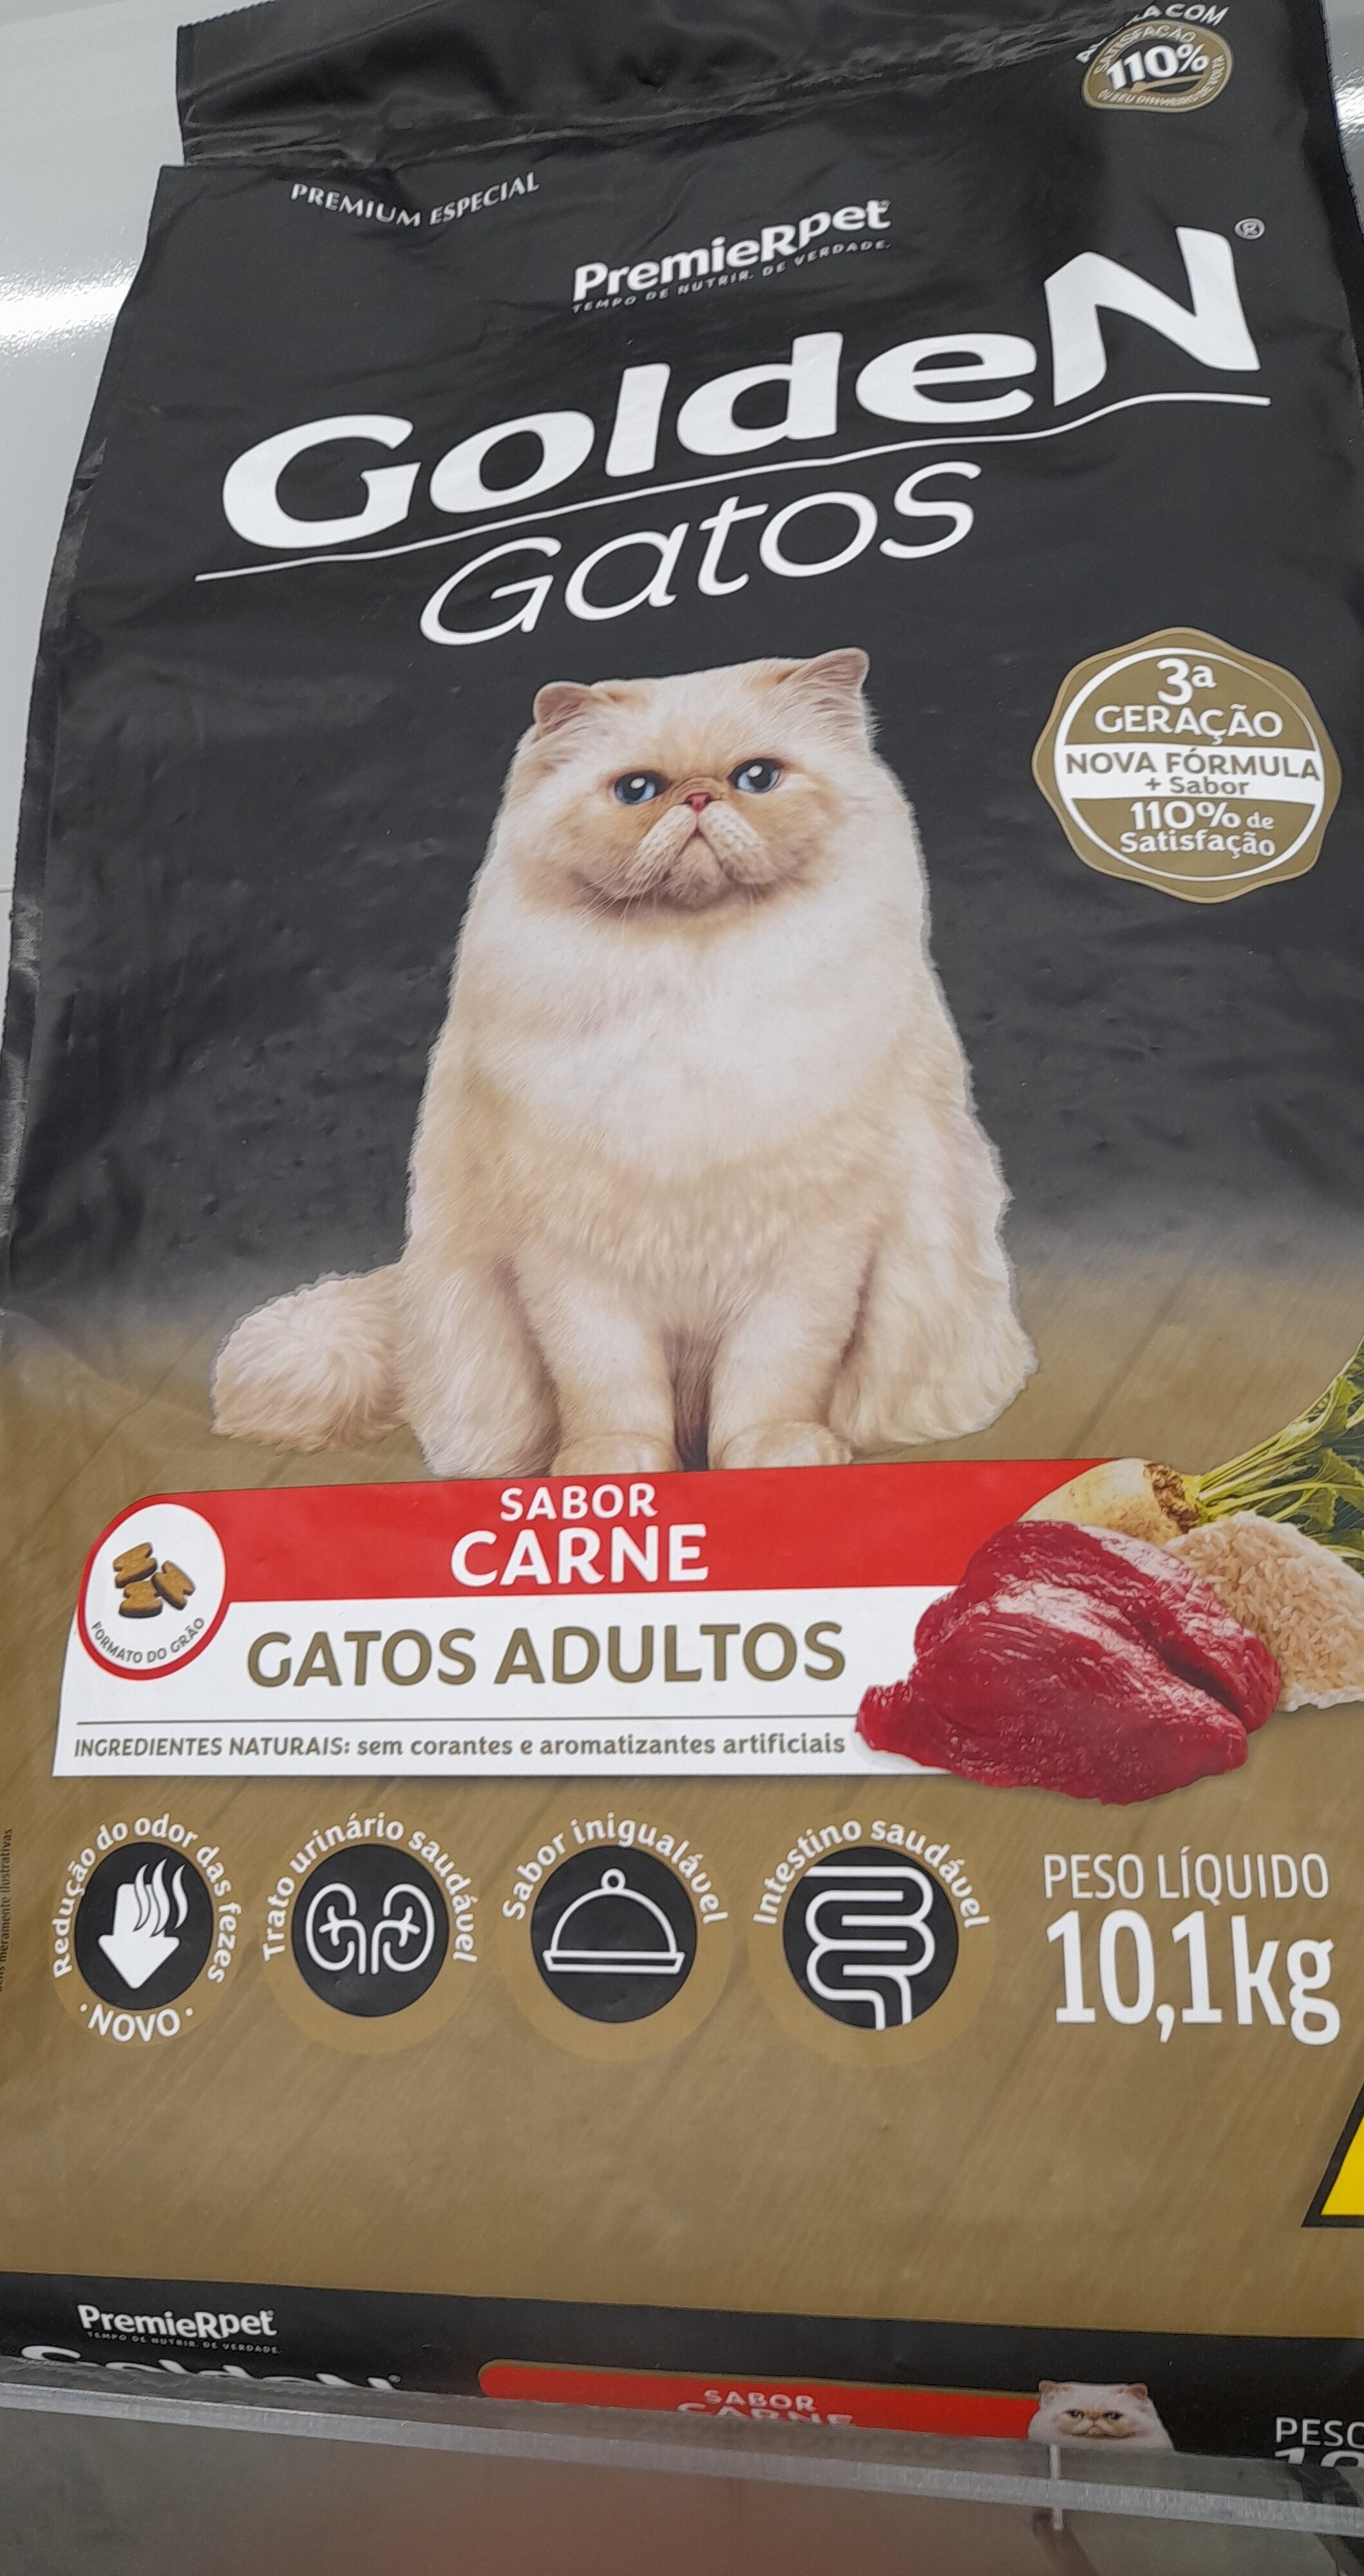 Golden gatos ad carne - Product - pt